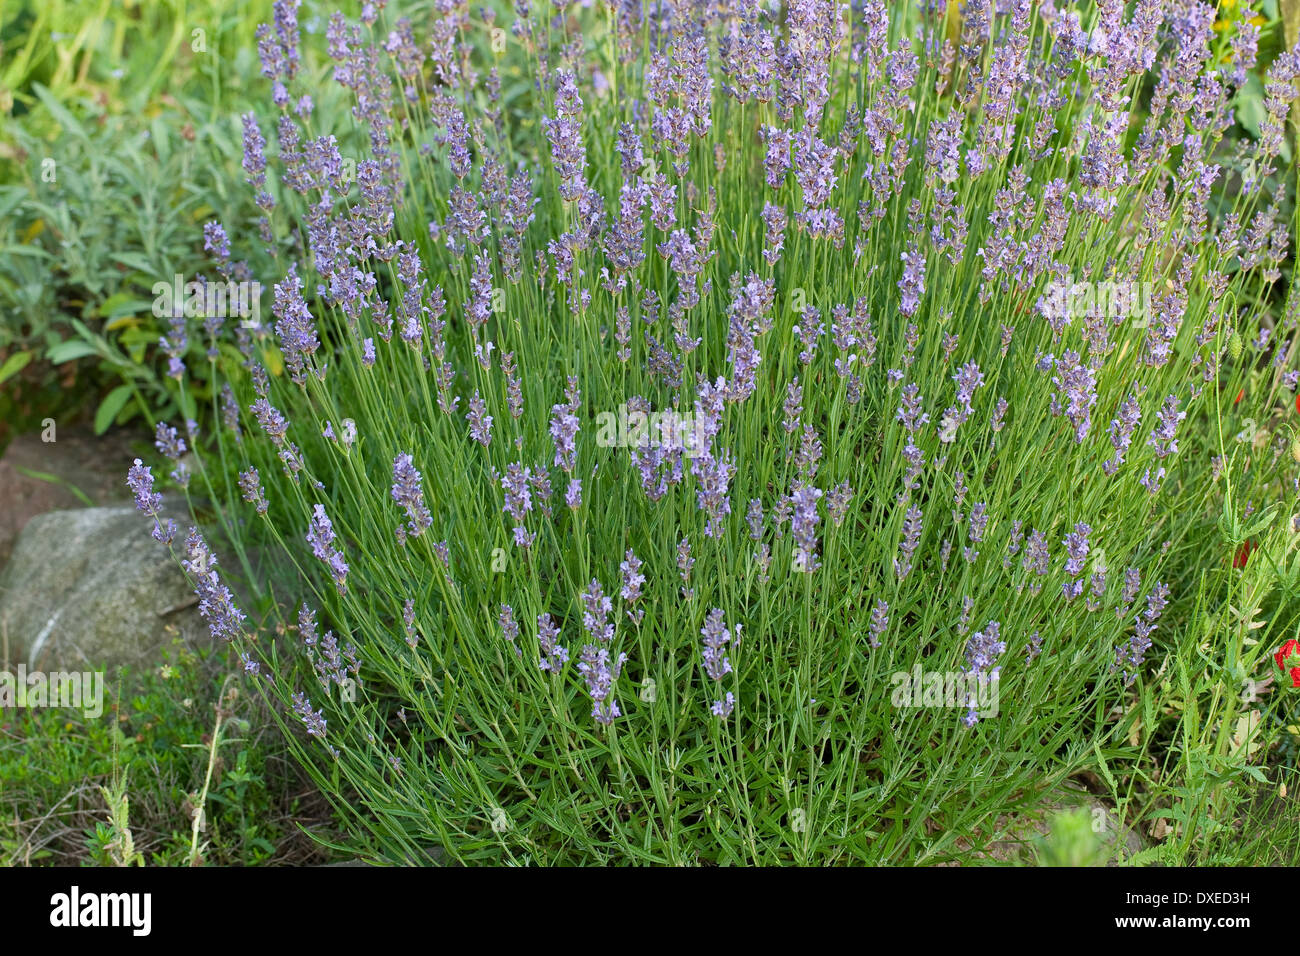 Lavendel, Echter Lavendel, Lavandula Angustifolia, Lavande vraie Stockfoto